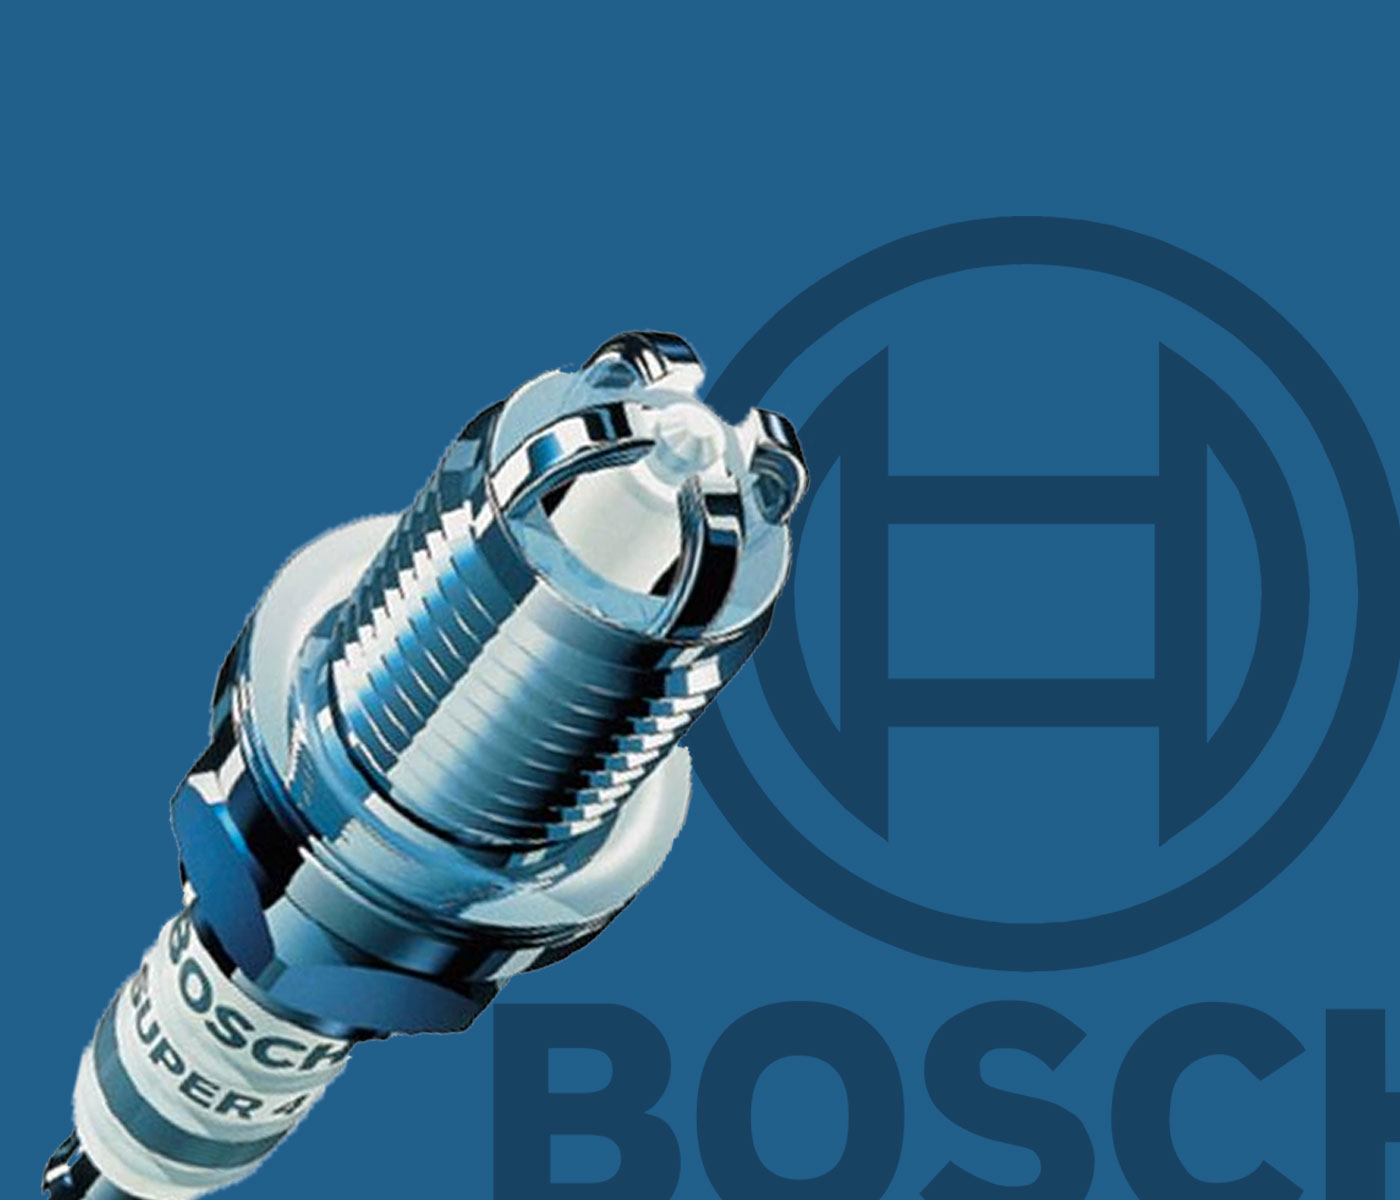 Bosch USA - pk | creative